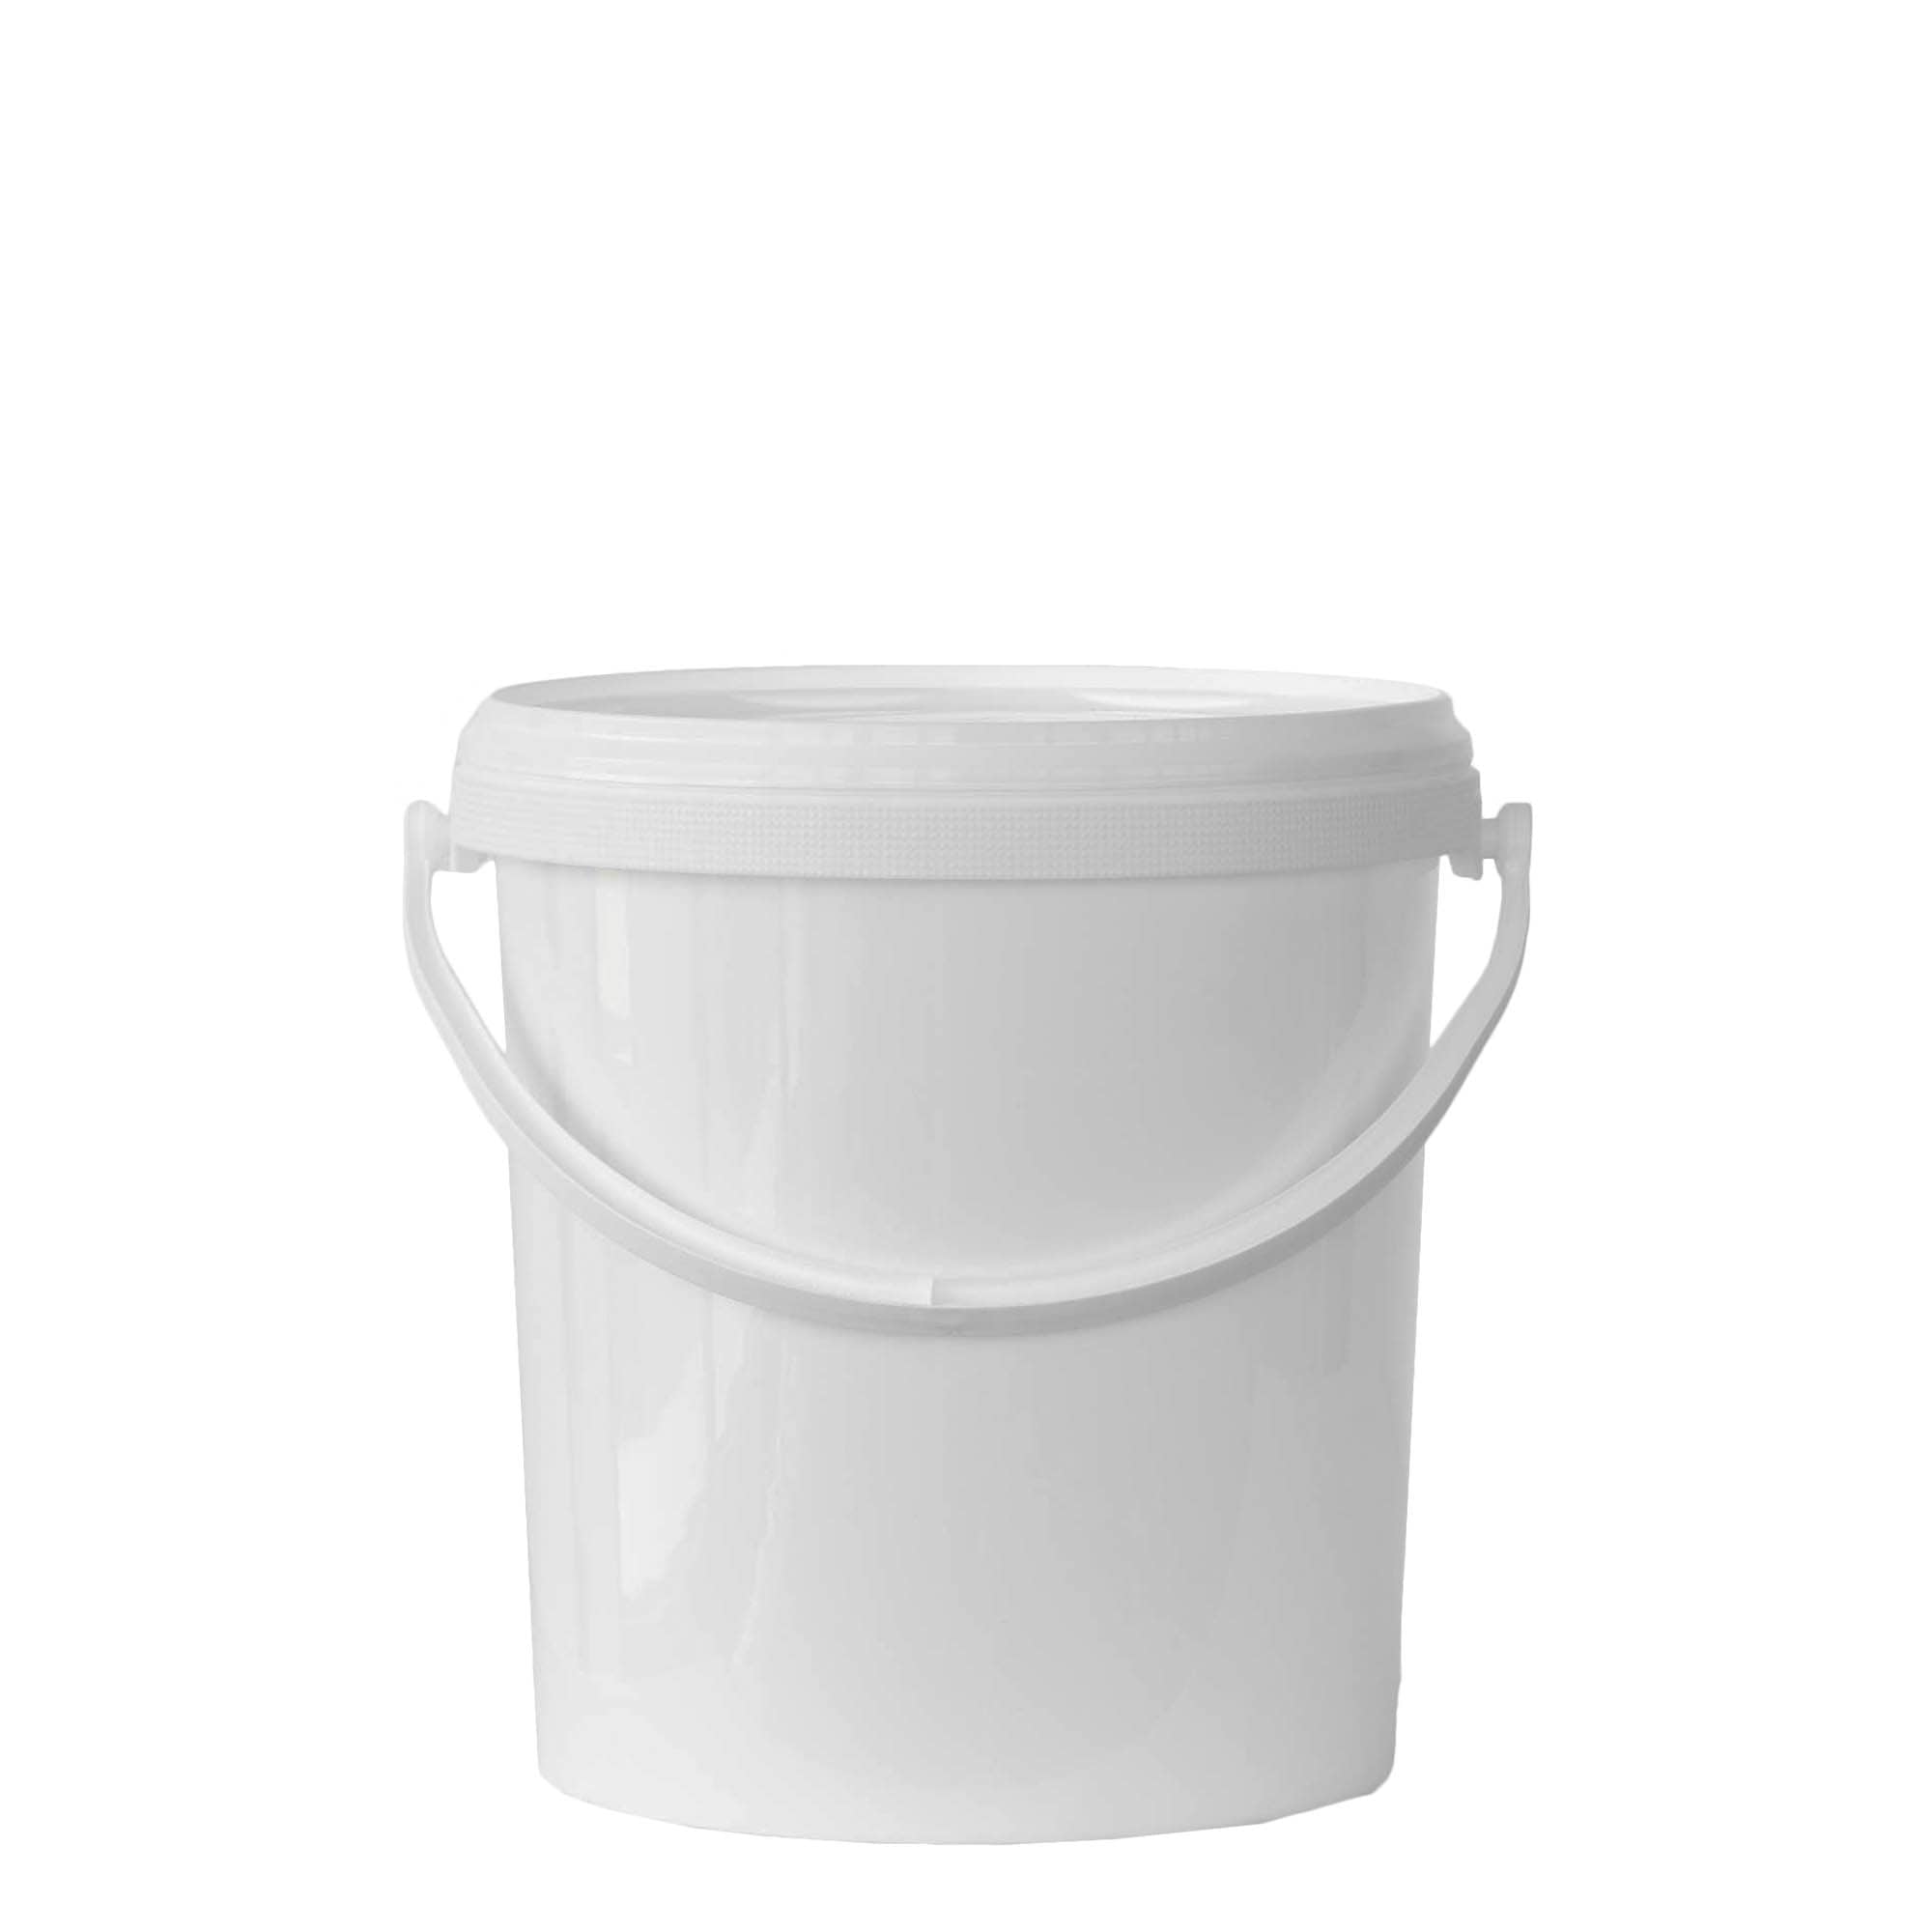 6 l bucket, PP plastic, white